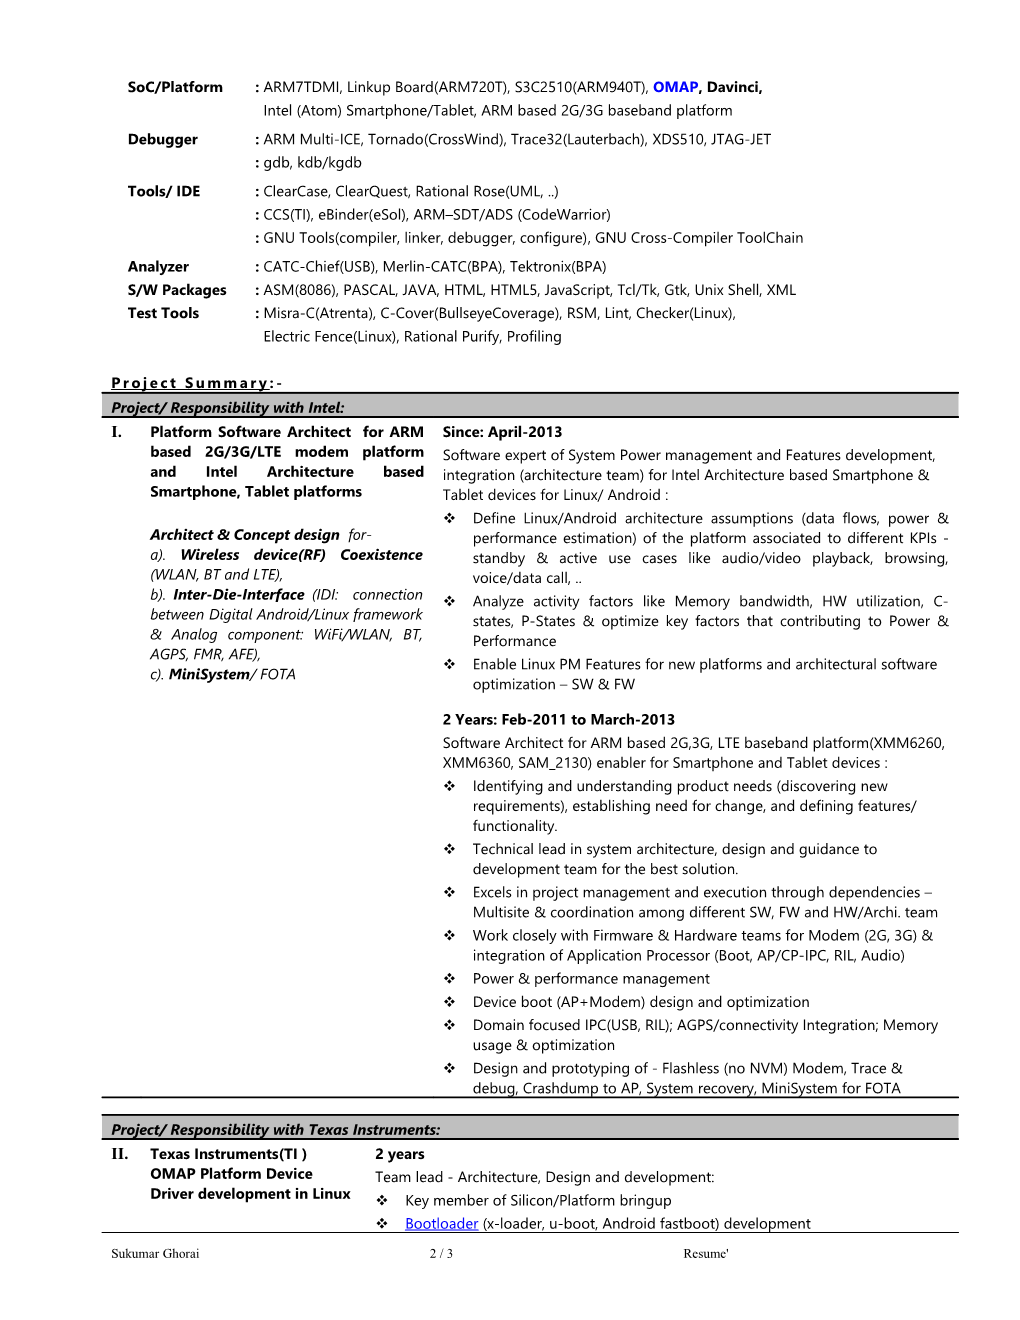 Resume' of Sukumar Ghorai